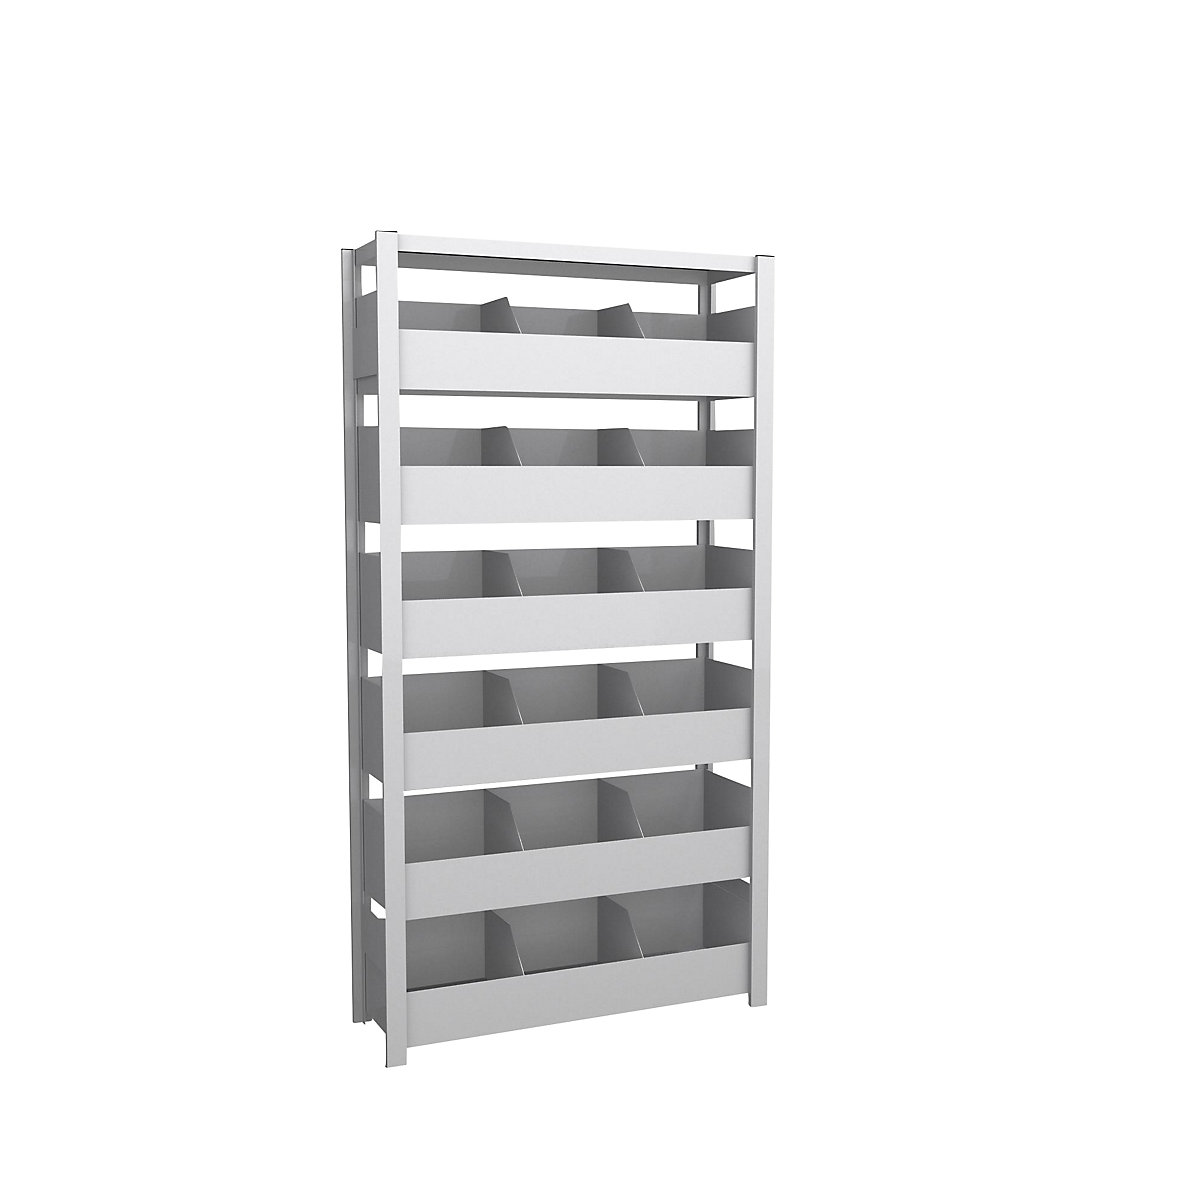 Bulk material shelving unit – hofe, shelf height 2000 mm, standard shelf unit, WxD 1060 x 335 mm